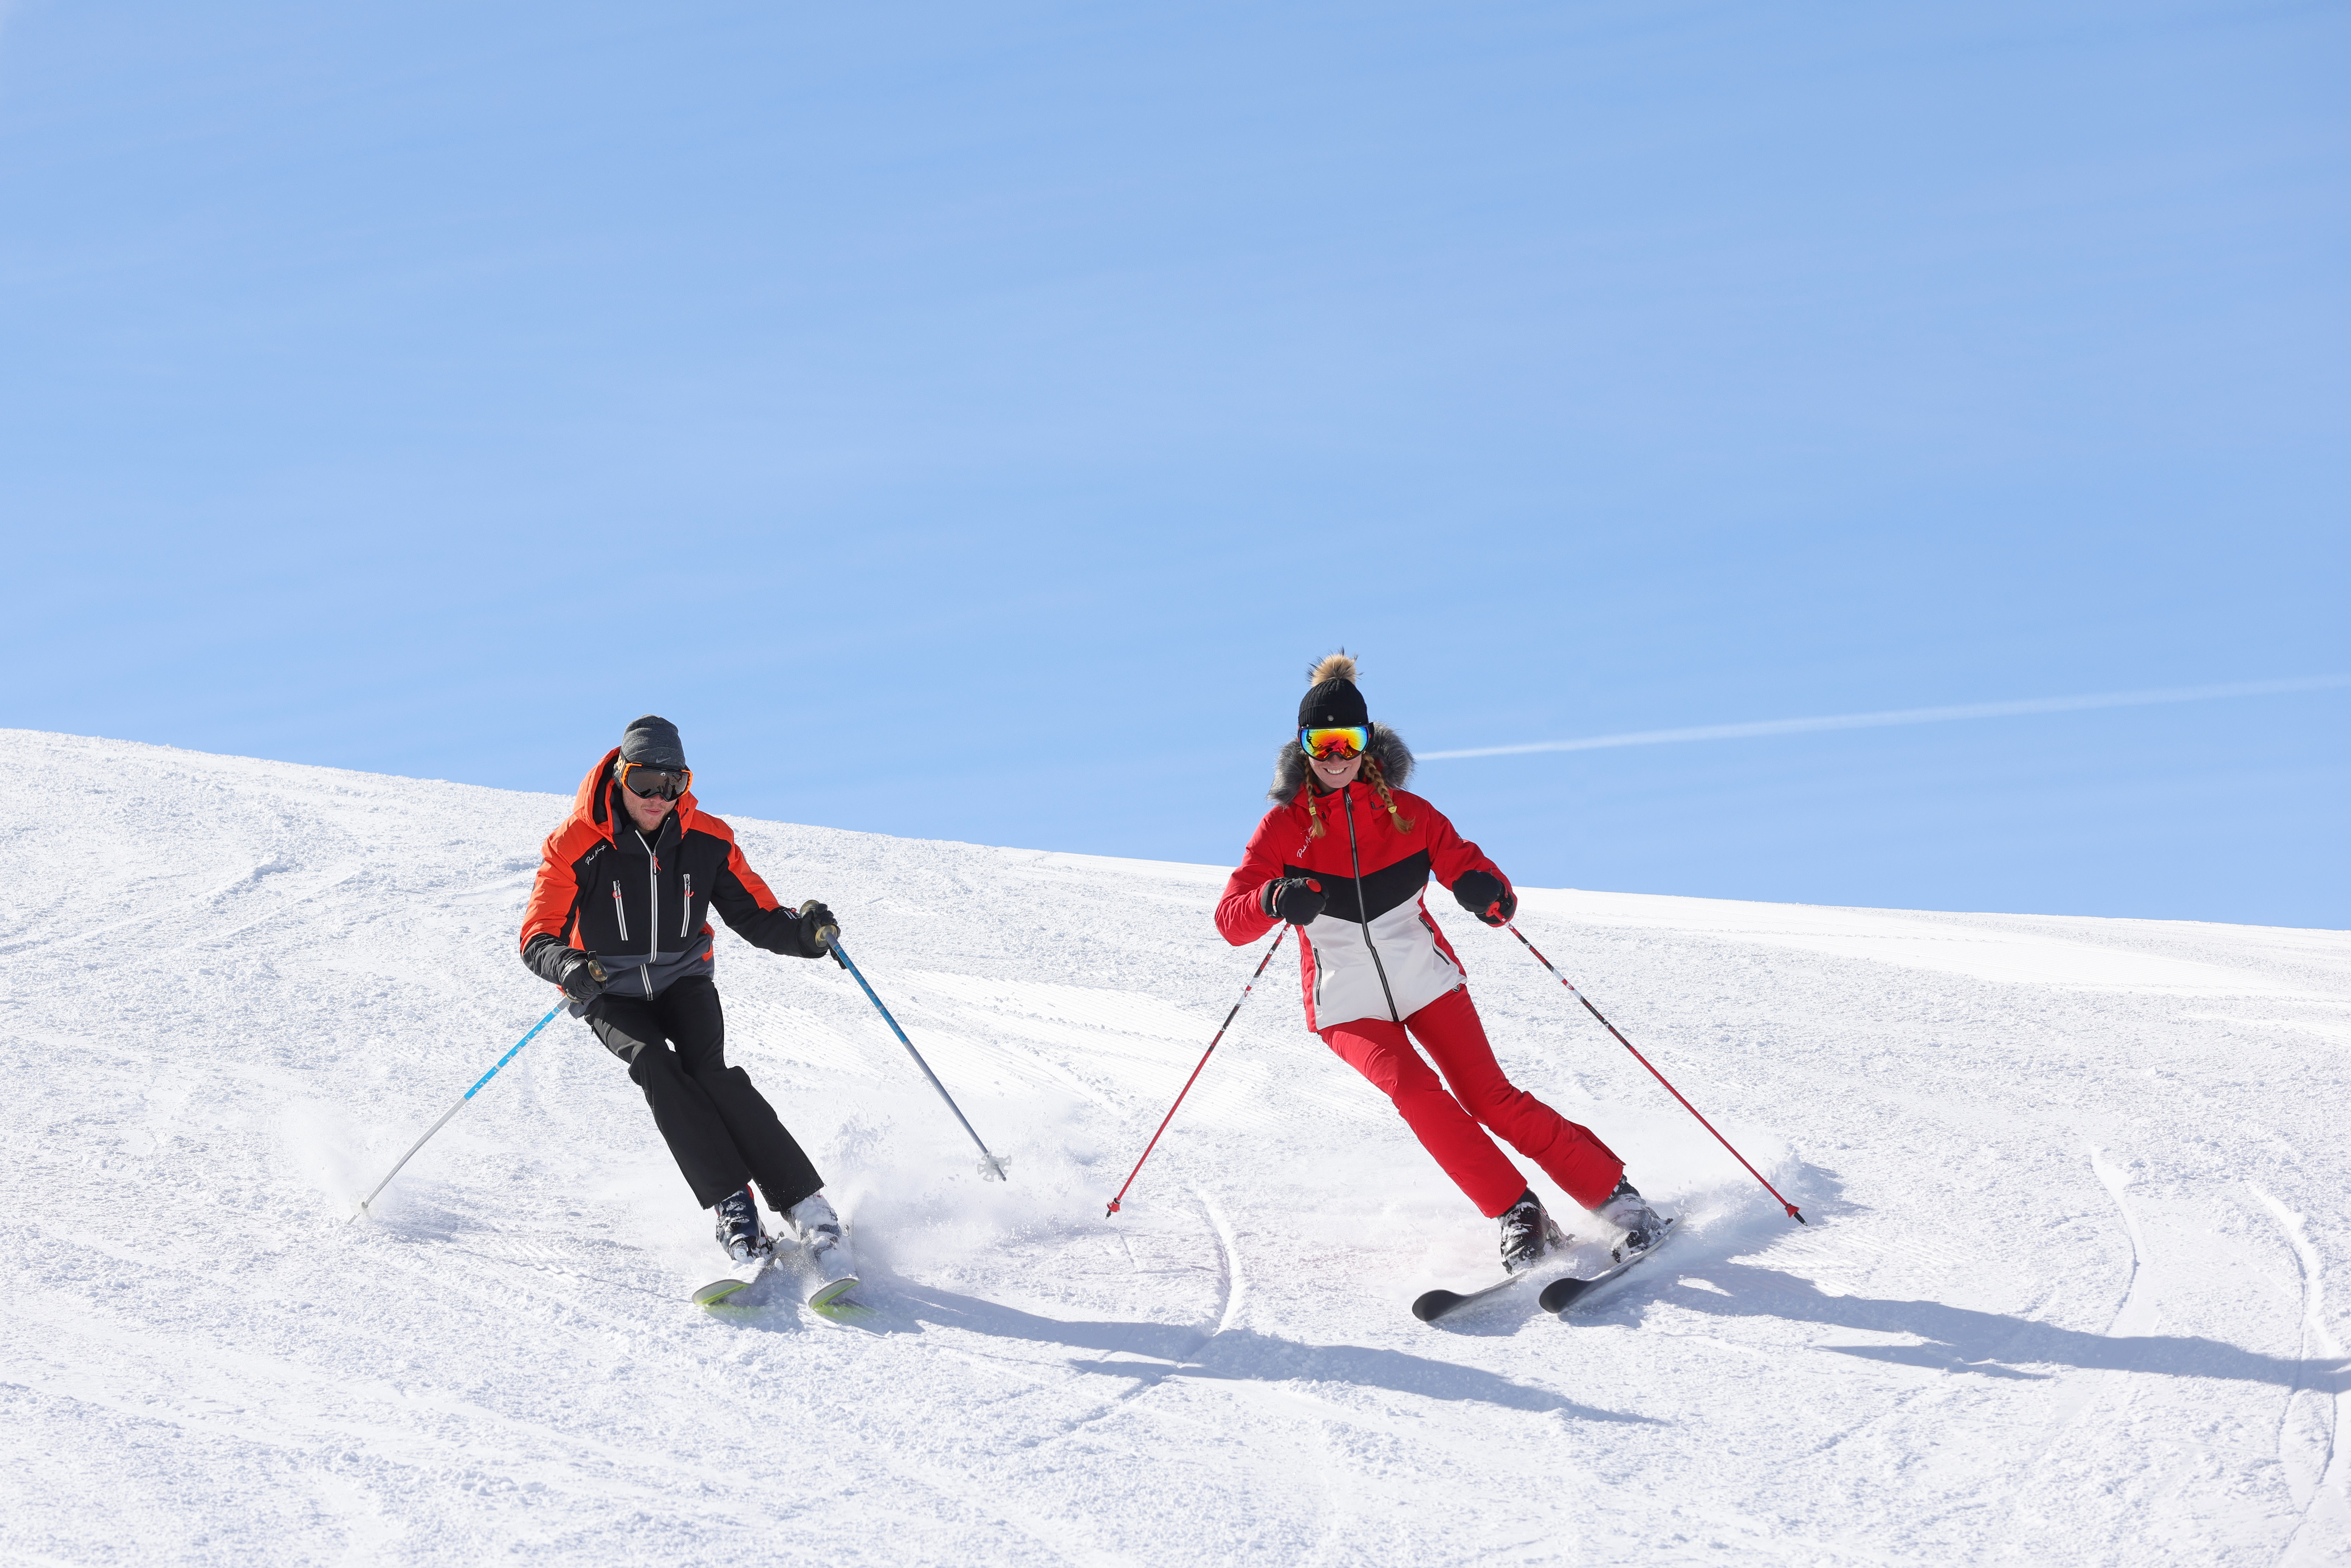 Chaussure de ski — Wikipédia